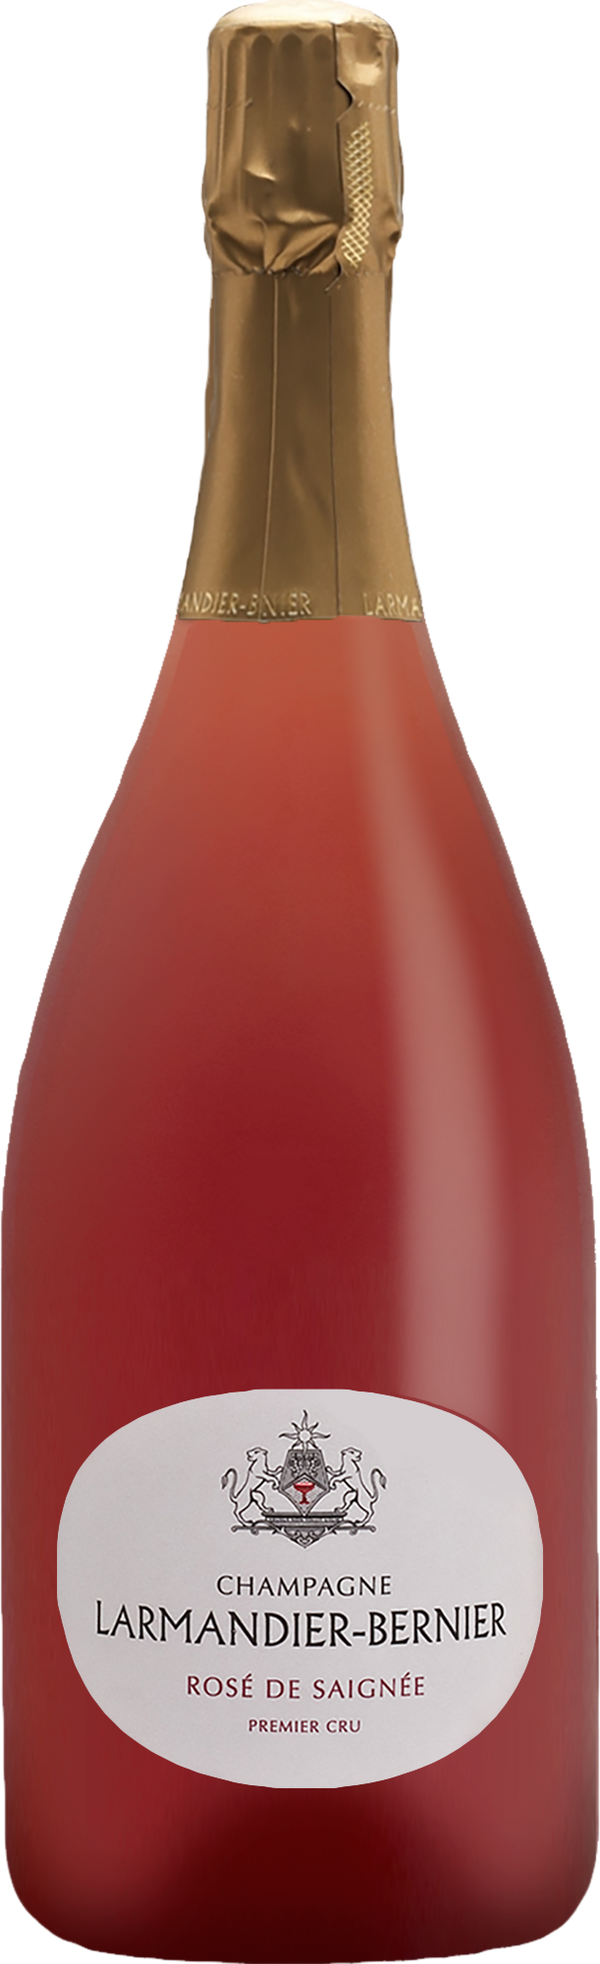 Champagne Larmandier-Bernier 1er Cru Rosé de Saignée NV (Base 18. Disg. Apr 2021) (1500ml)